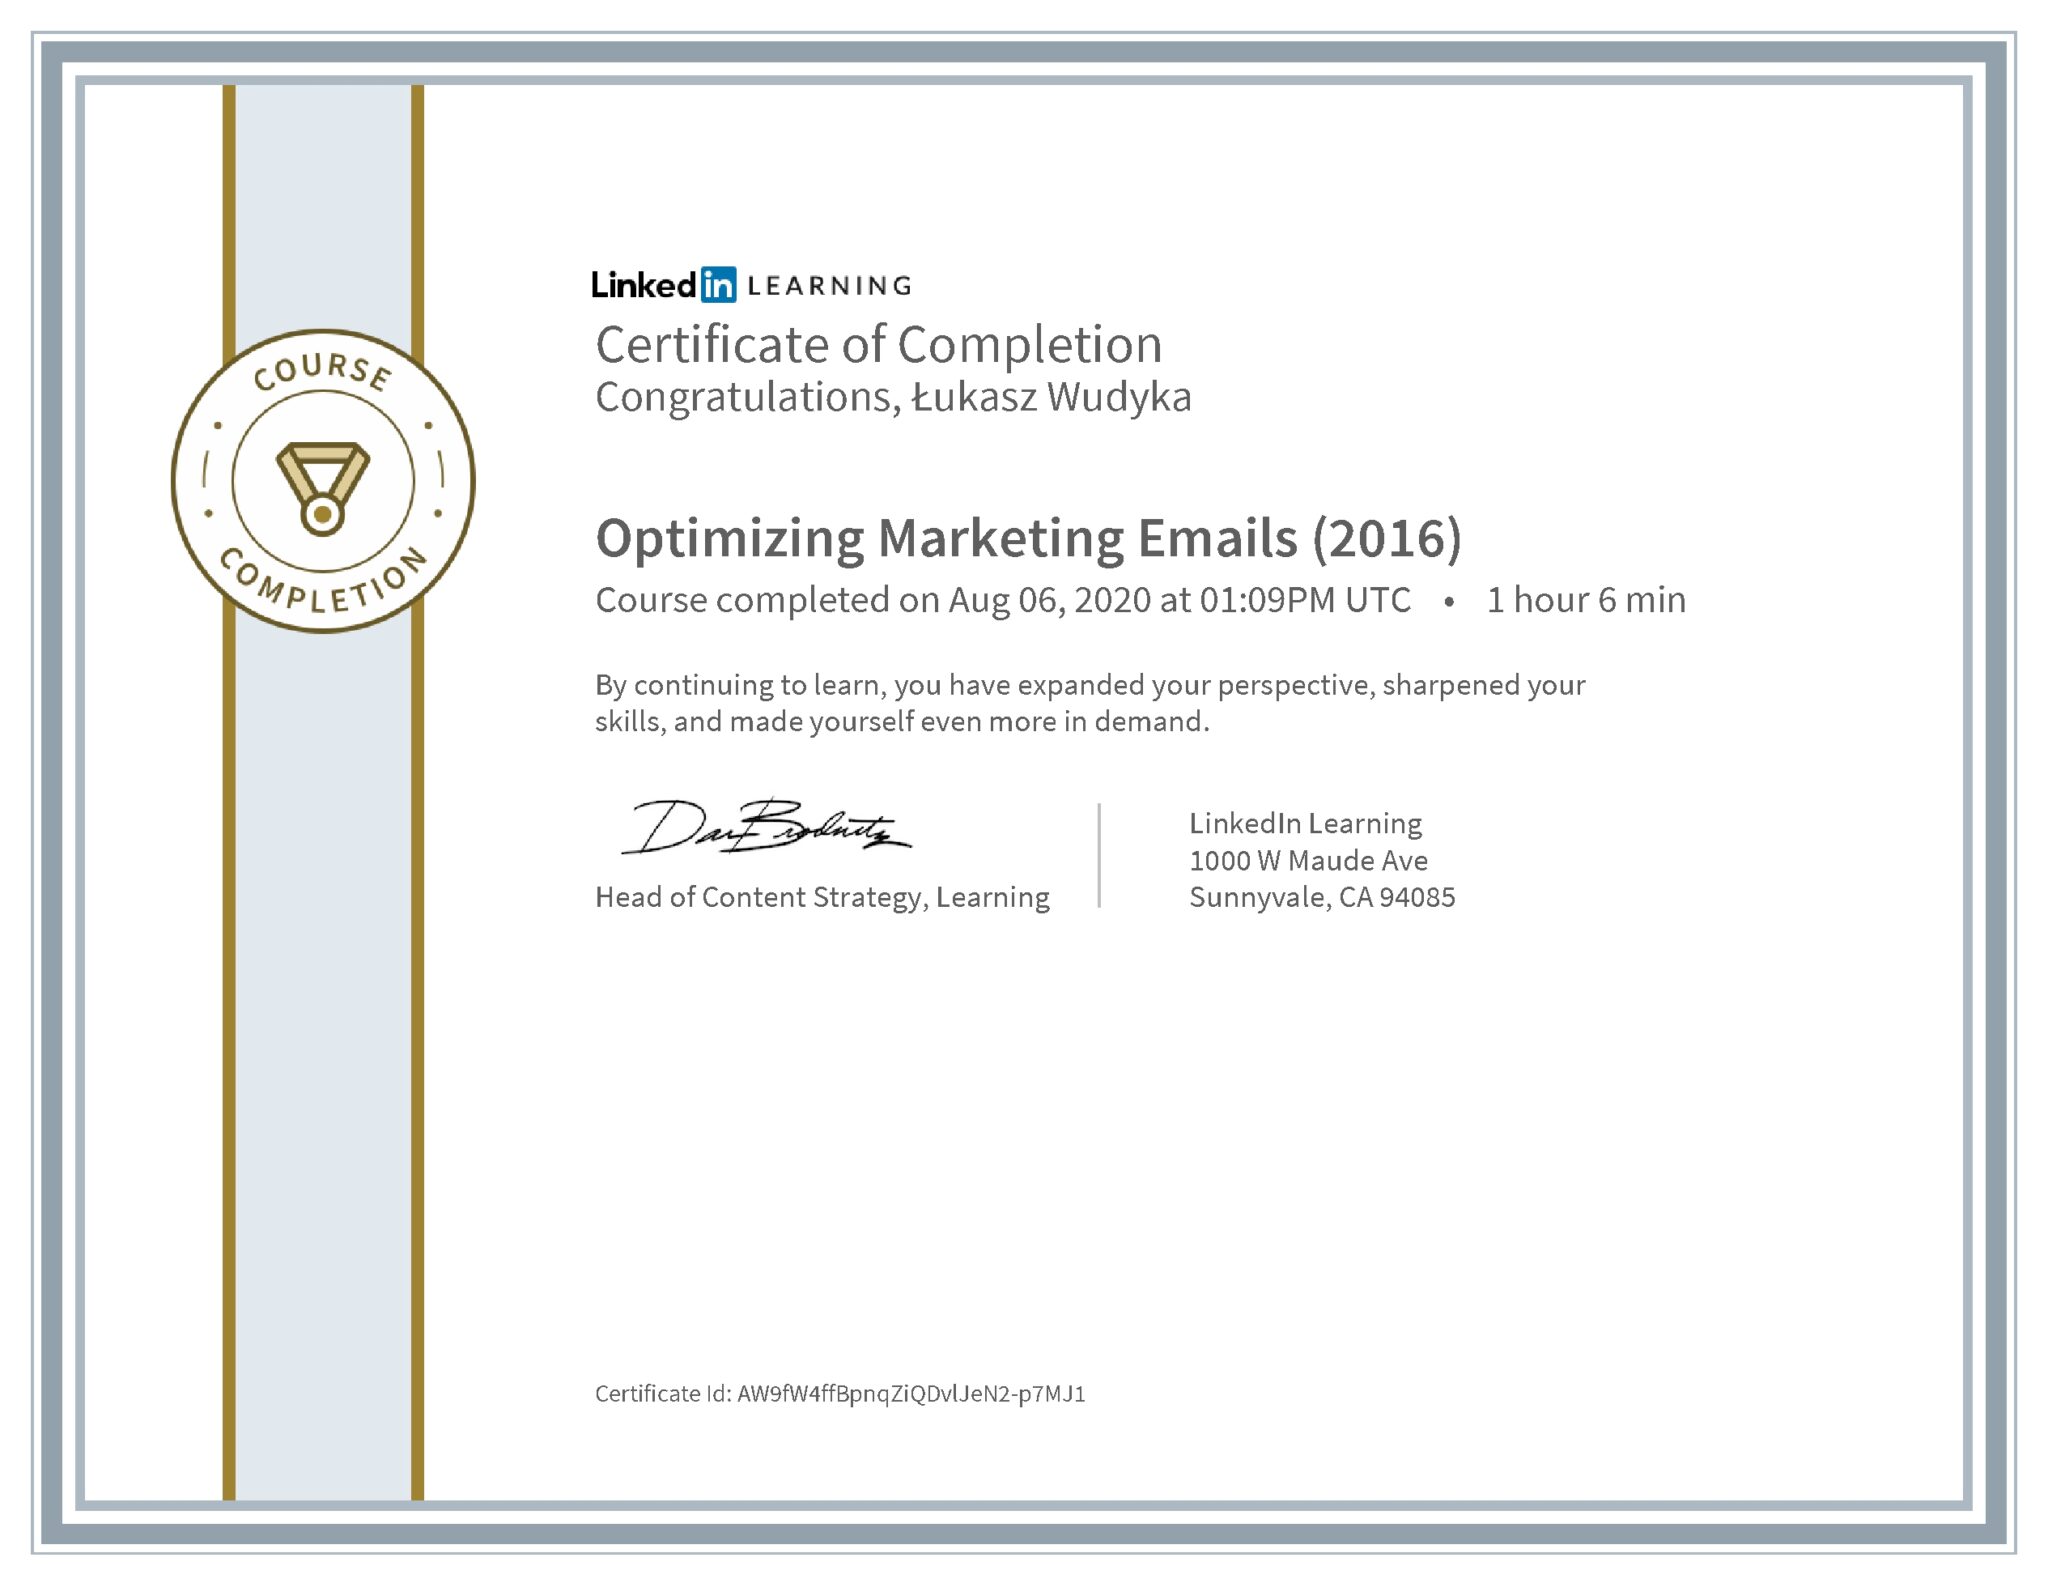 Łukasz Wudyka certyfikat LinkedIn Optimizing Marketing Emails (2016)